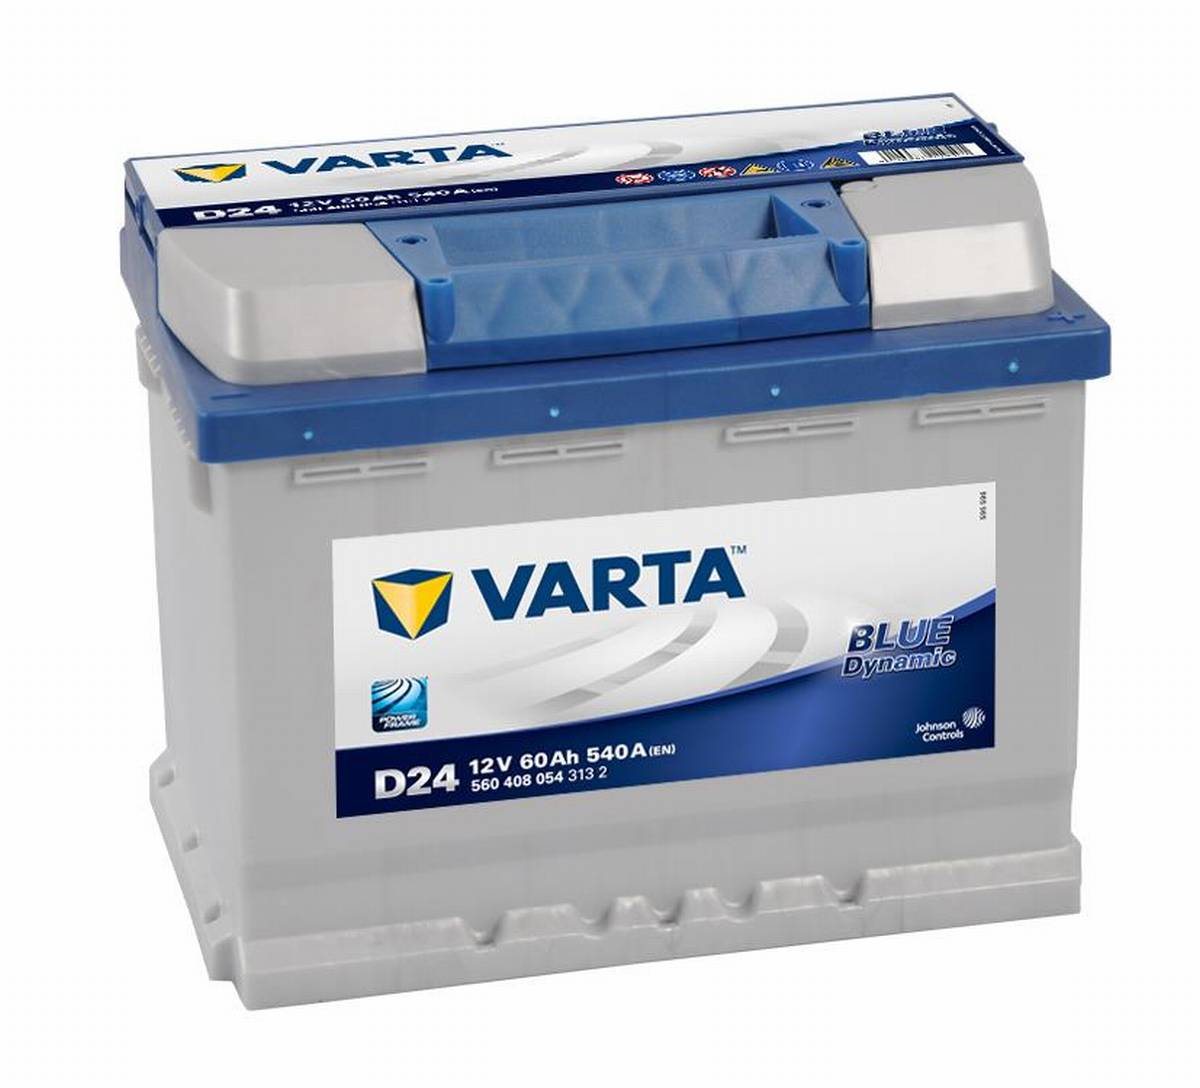 VARTA D24 Blue Dynamic 12V 60Ah 540A batteria auto 560 408 054